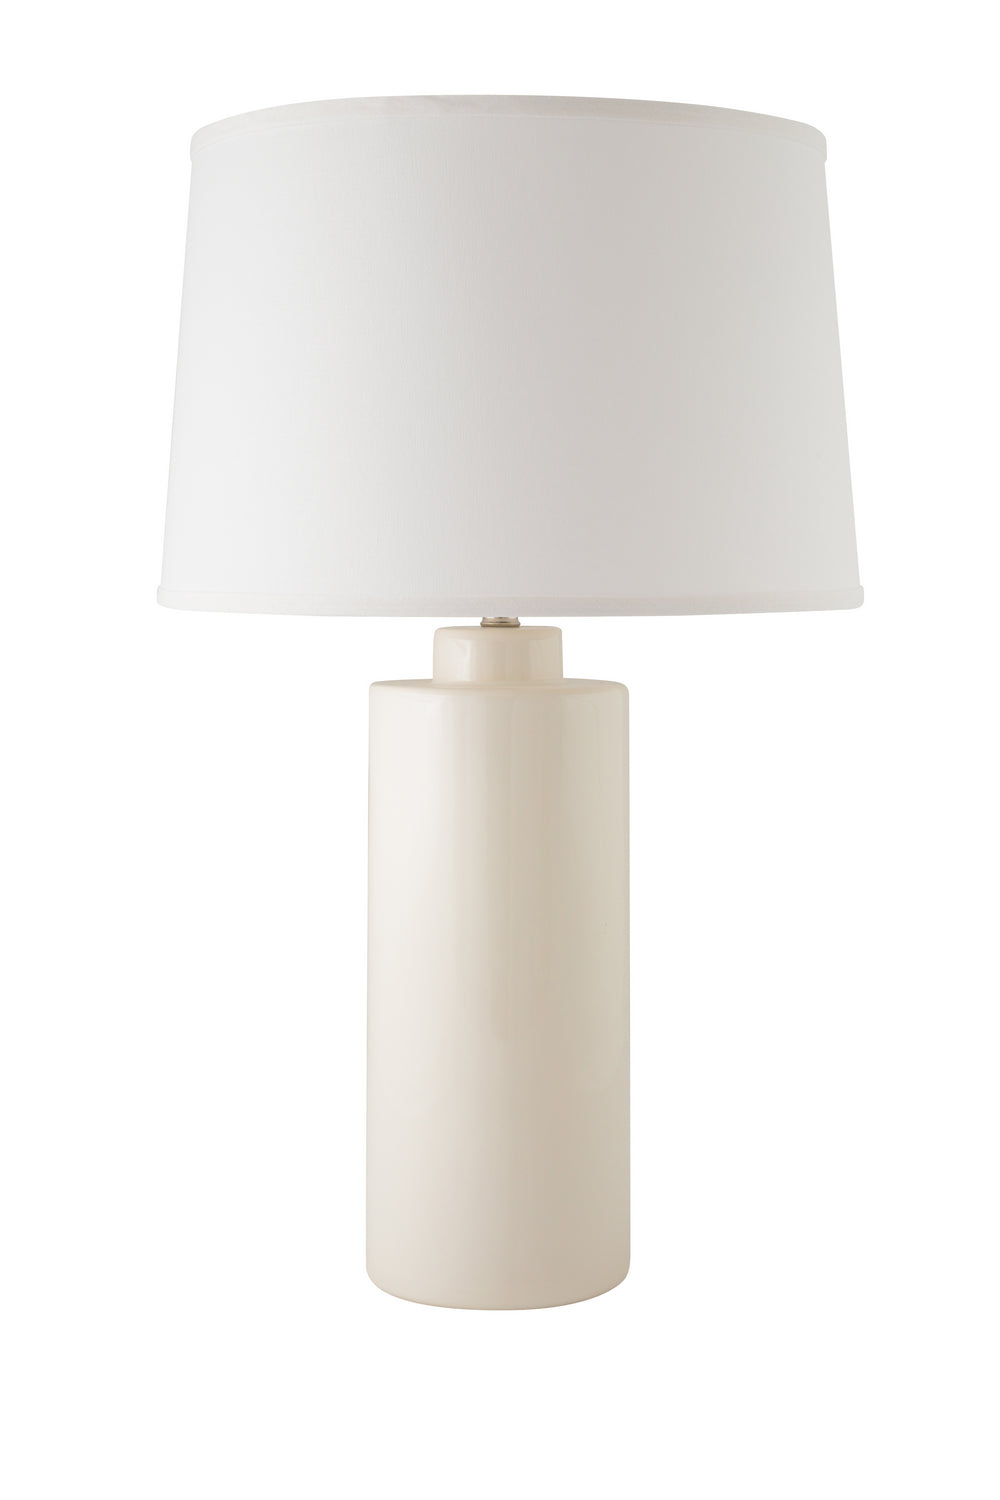 River Ceramic Lighting 439 -01 Cylinder One Light Table Lamp Lamp White